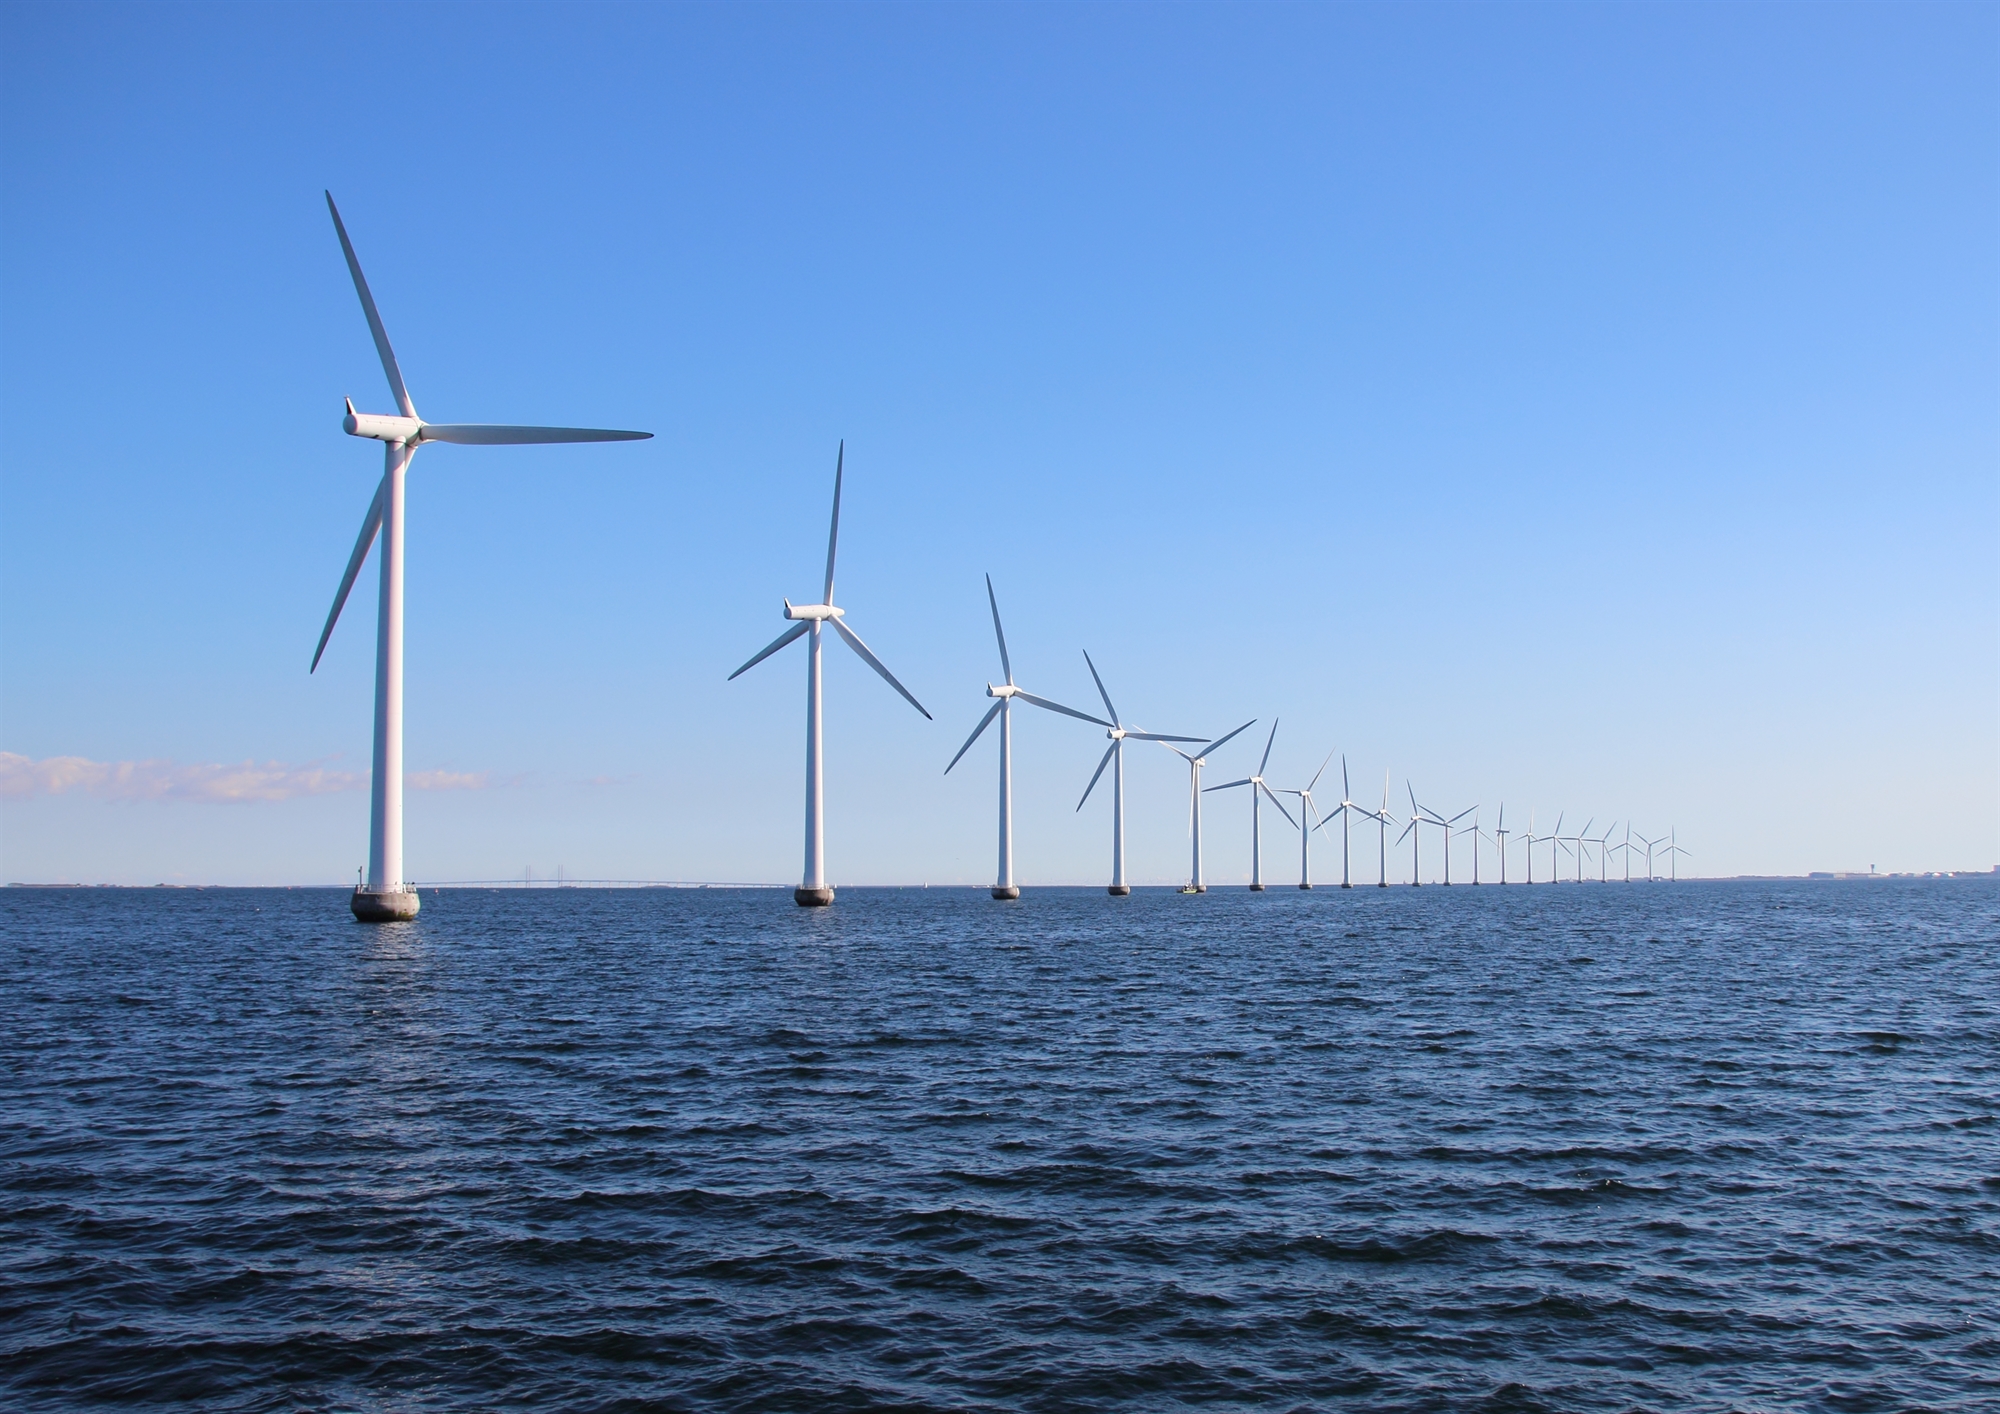 World’s single largest offshore wind farm, the 2.9 GW Hornsea 3